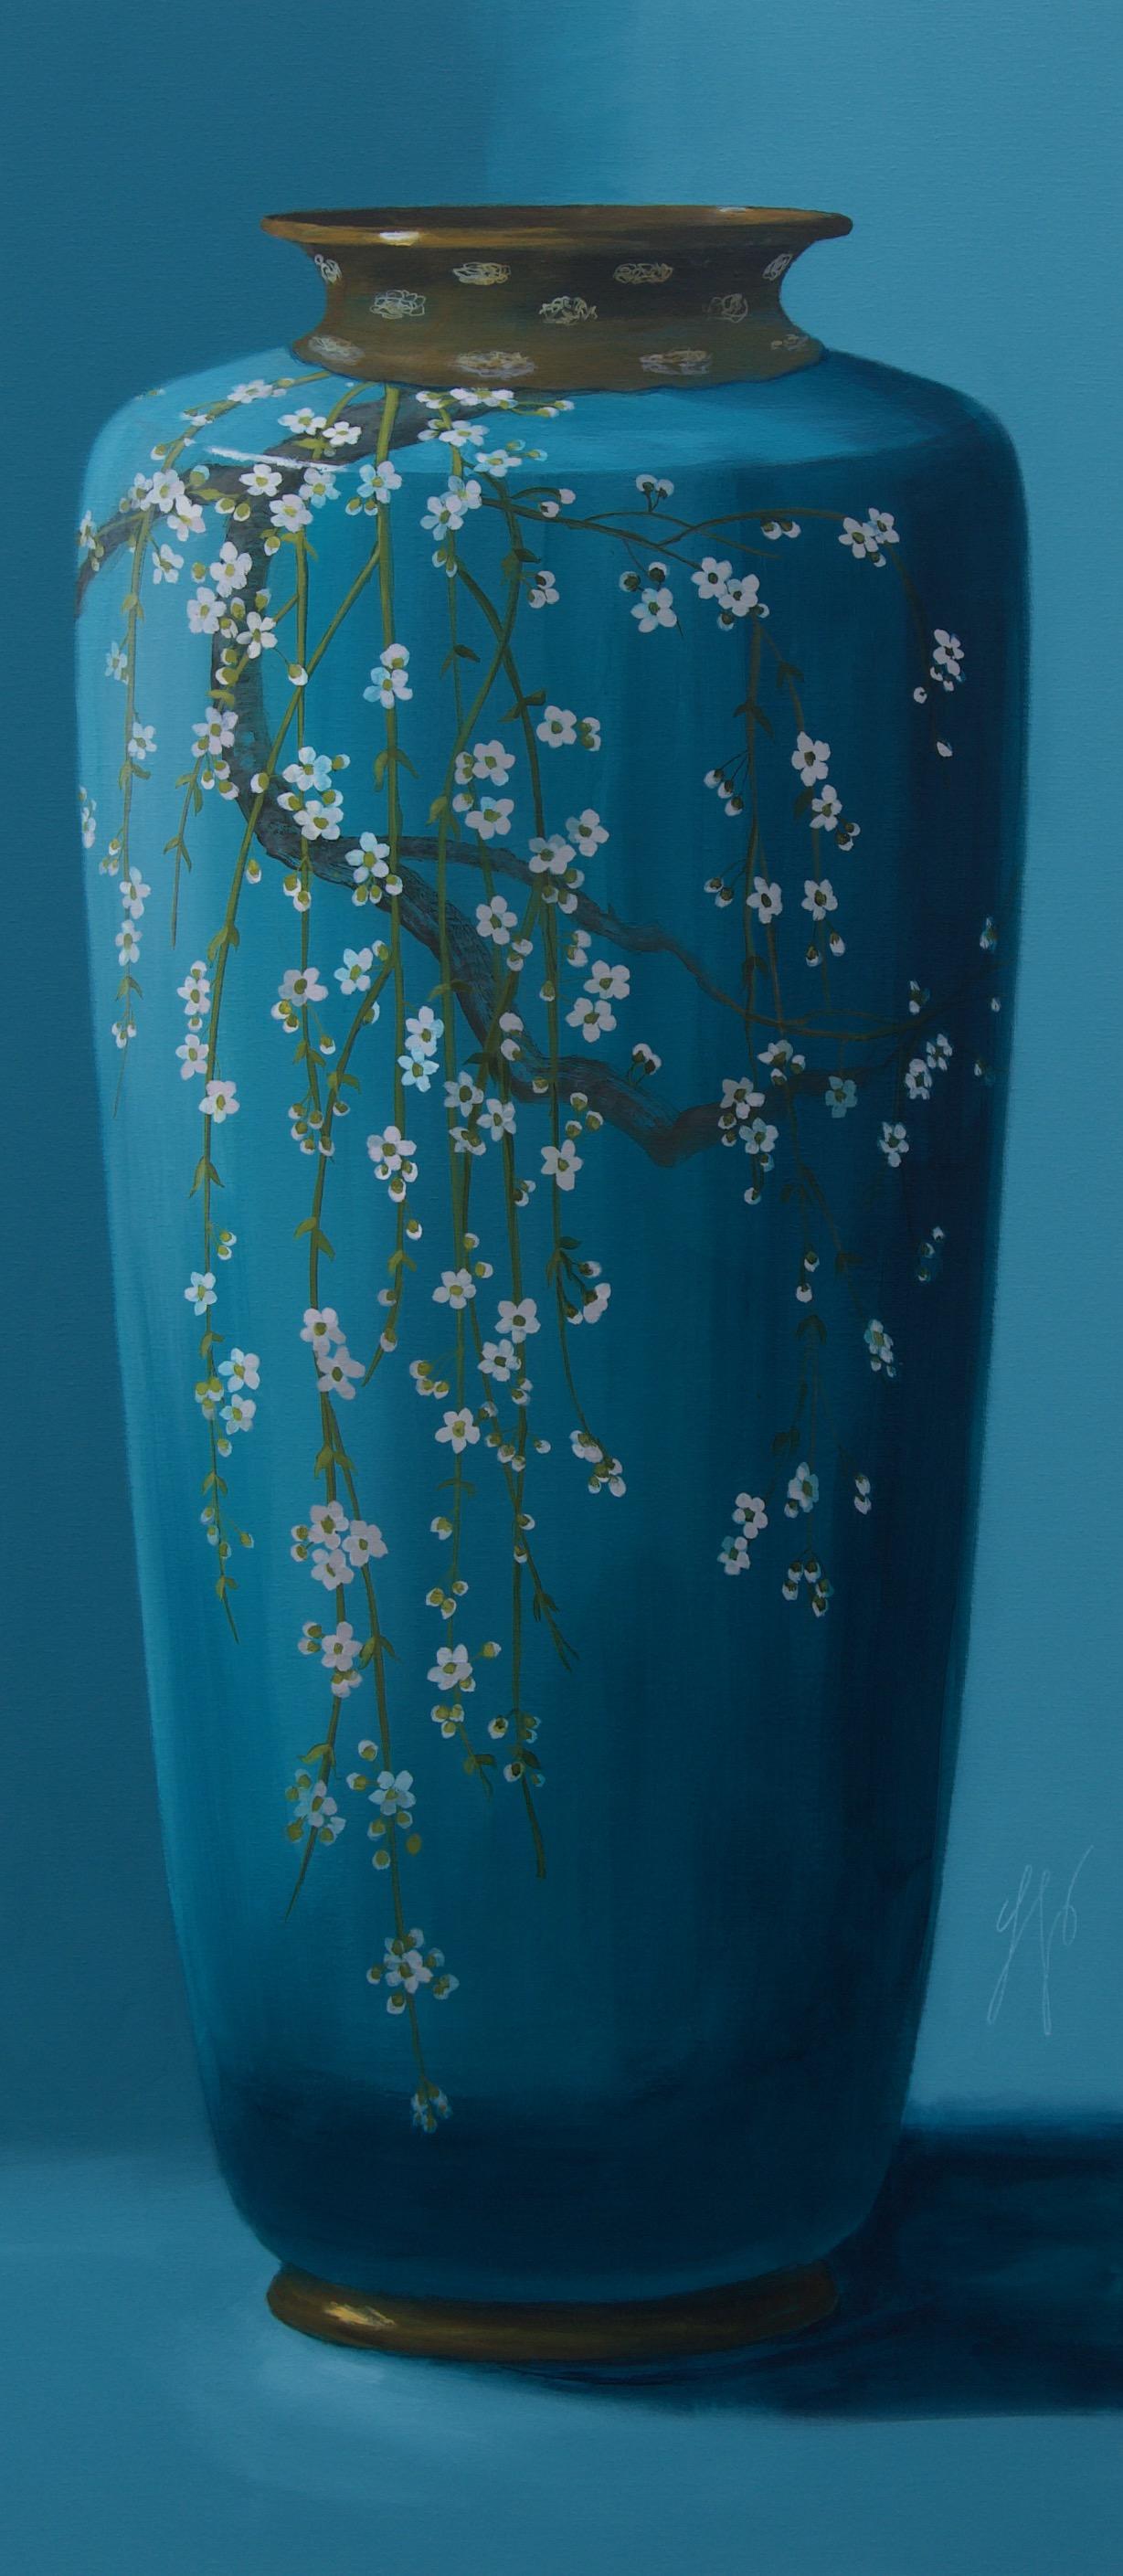 Sasja Wagenaar Figurative Painting - ''Turquoise Vase'', Dutch Contemporary Still Life Painting of Porcelain Vase